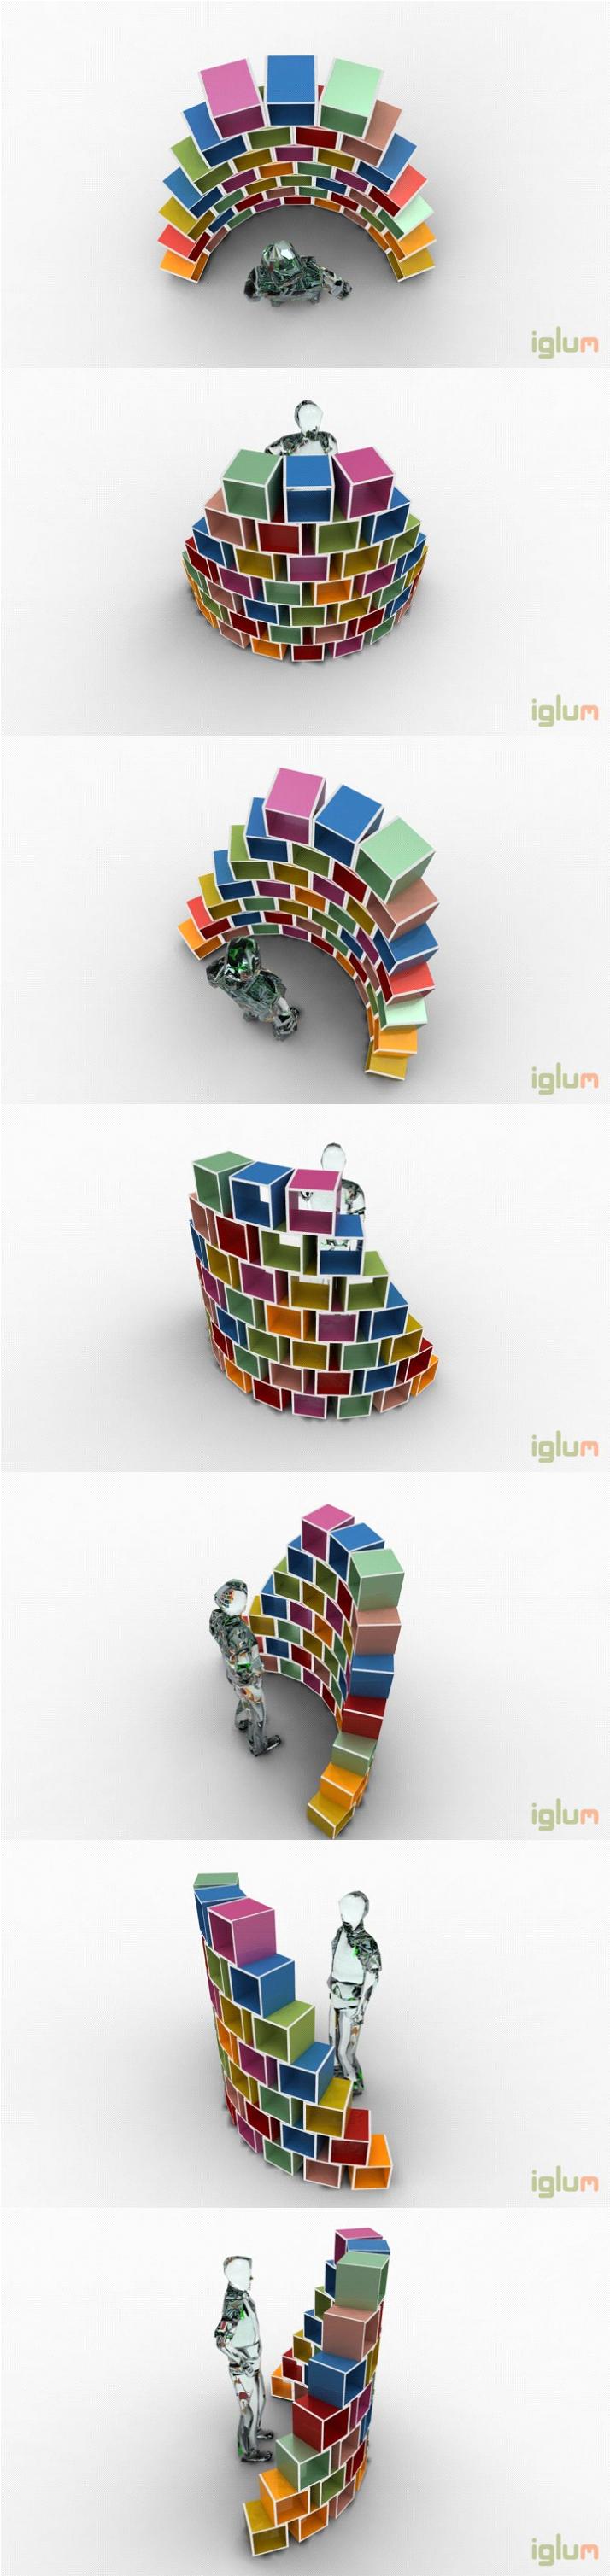 Iglum cube fixtures by Etobic